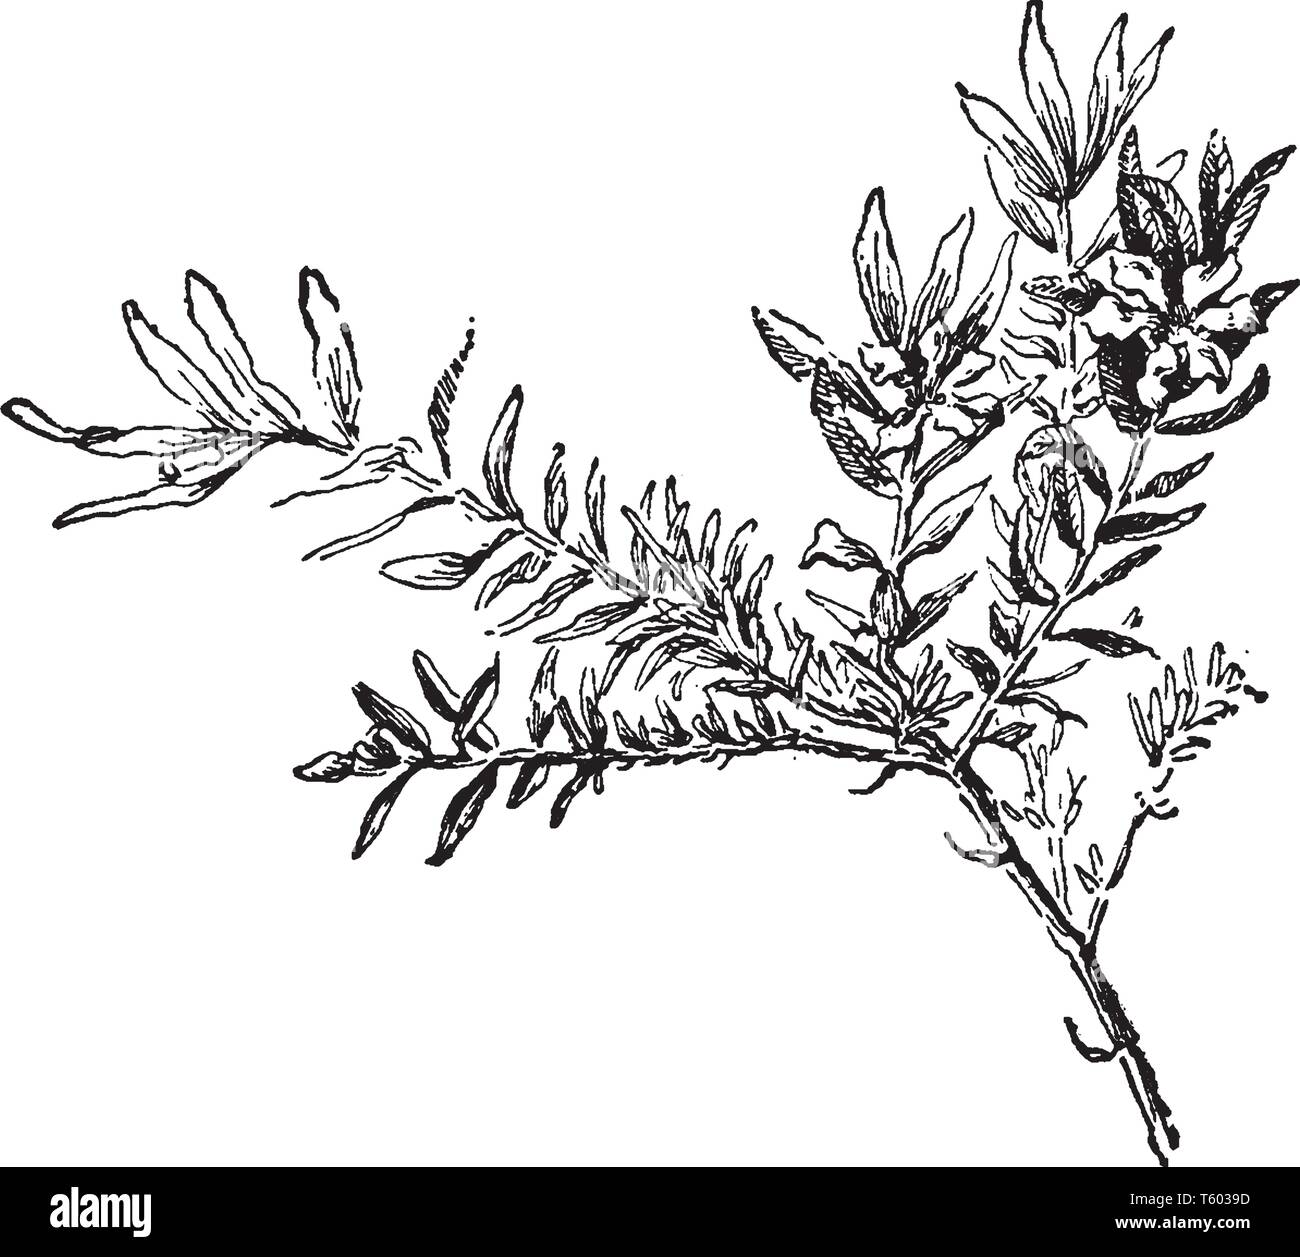 Twig of Cuphea Hyssopifolia shrub, Cuphea Hyssopifolia is a small tropical evergreen sub-shrub, vintage line drawing or engraving illustration. Stock Vector